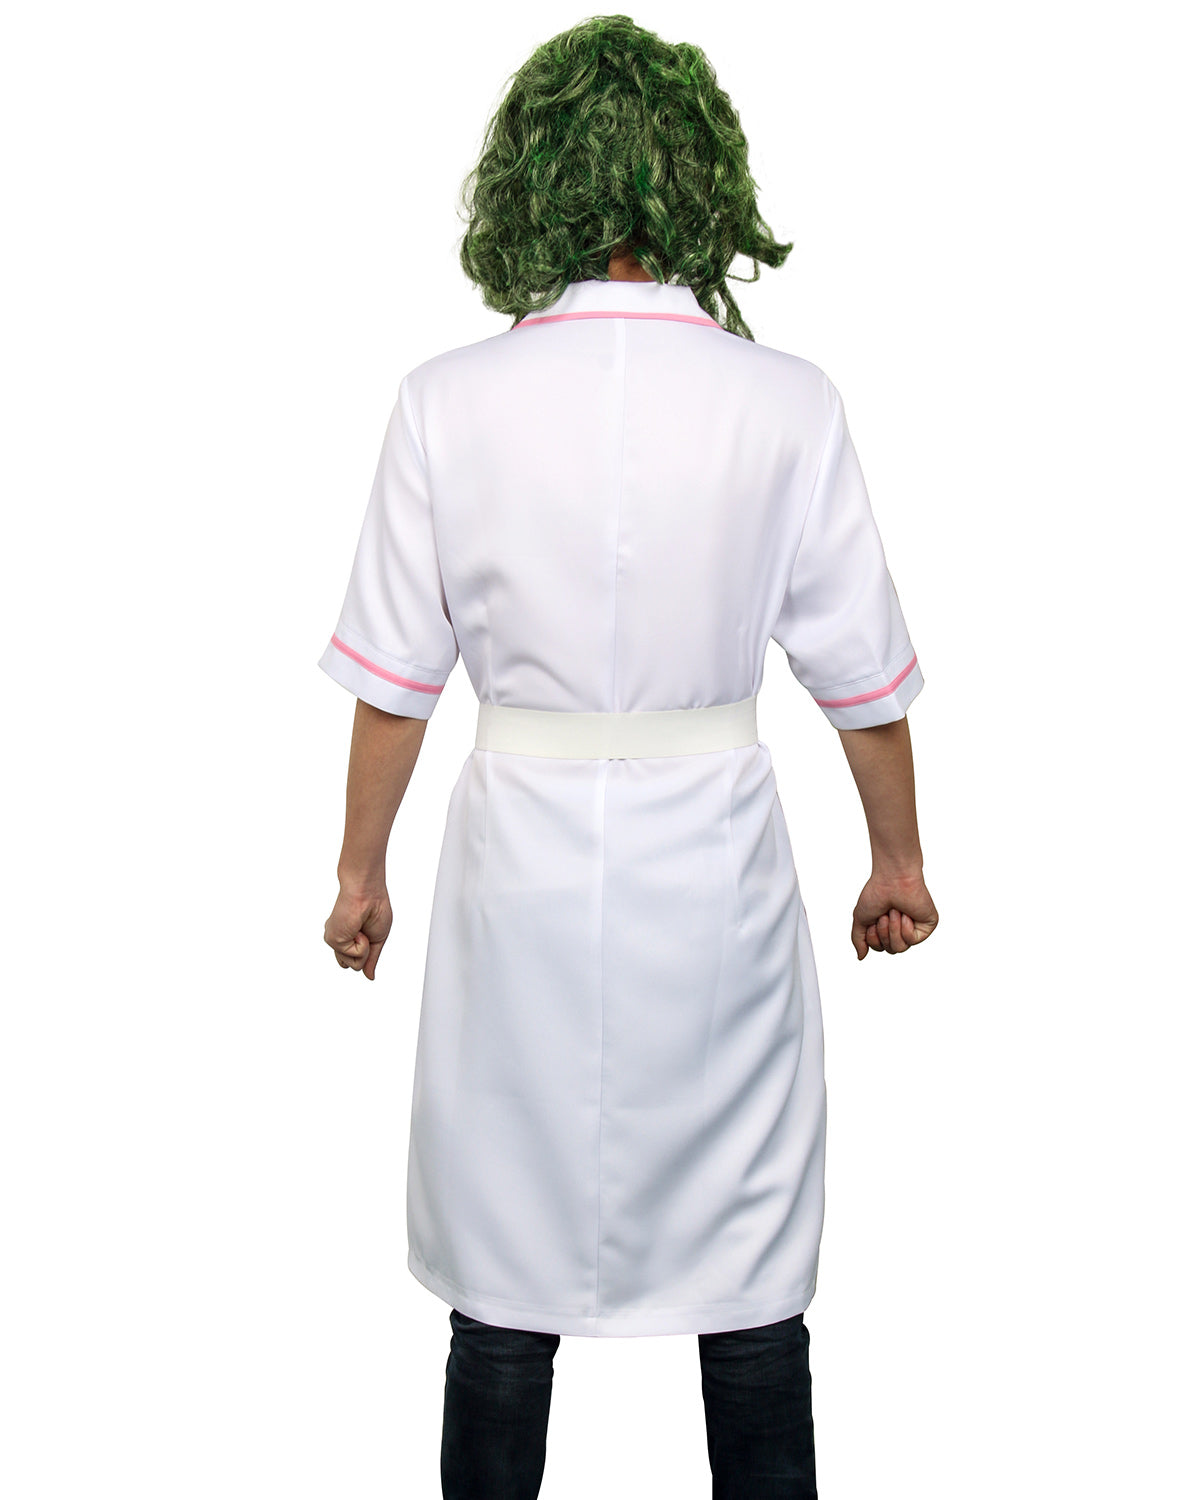 Batman Dark Knight Heath Ledger Joker Nurse Cosplay Costume